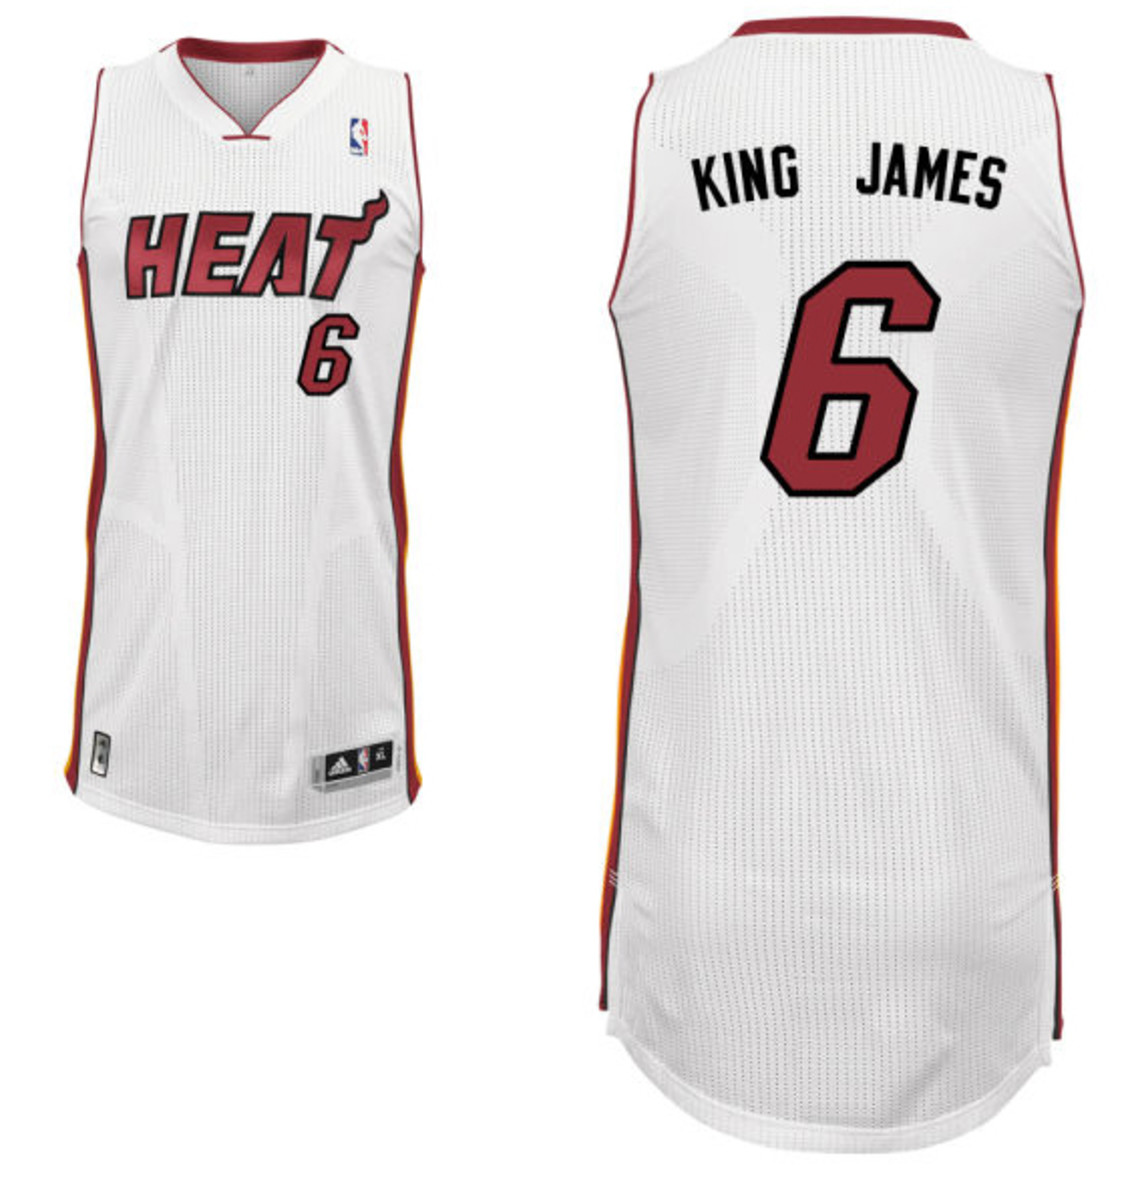 Adidas Miami Heat Lebron James Nickname Jersey